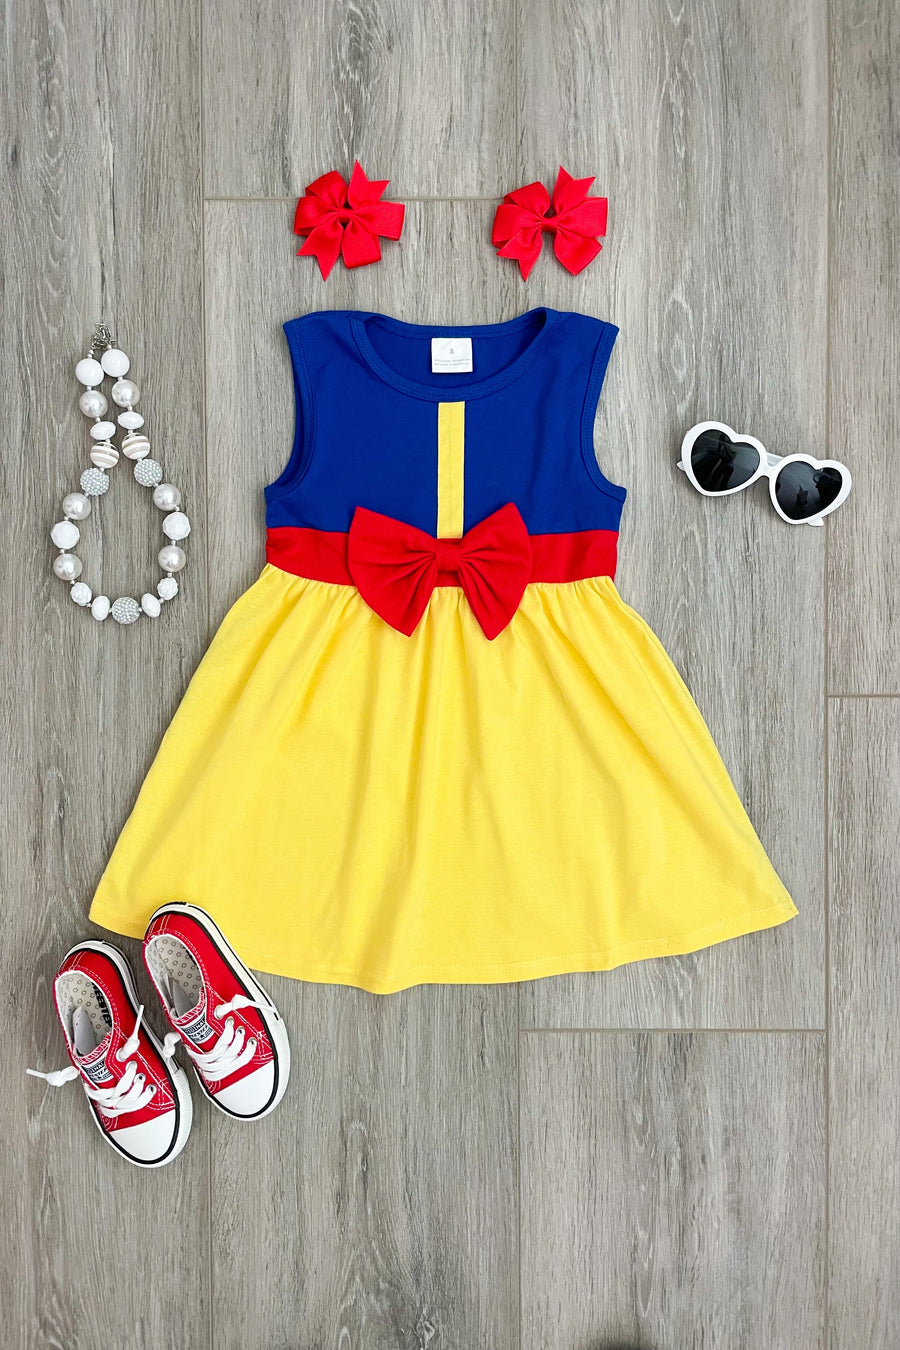 Blue/Red/Yellow Princess Dress - Rylee Faith Designs